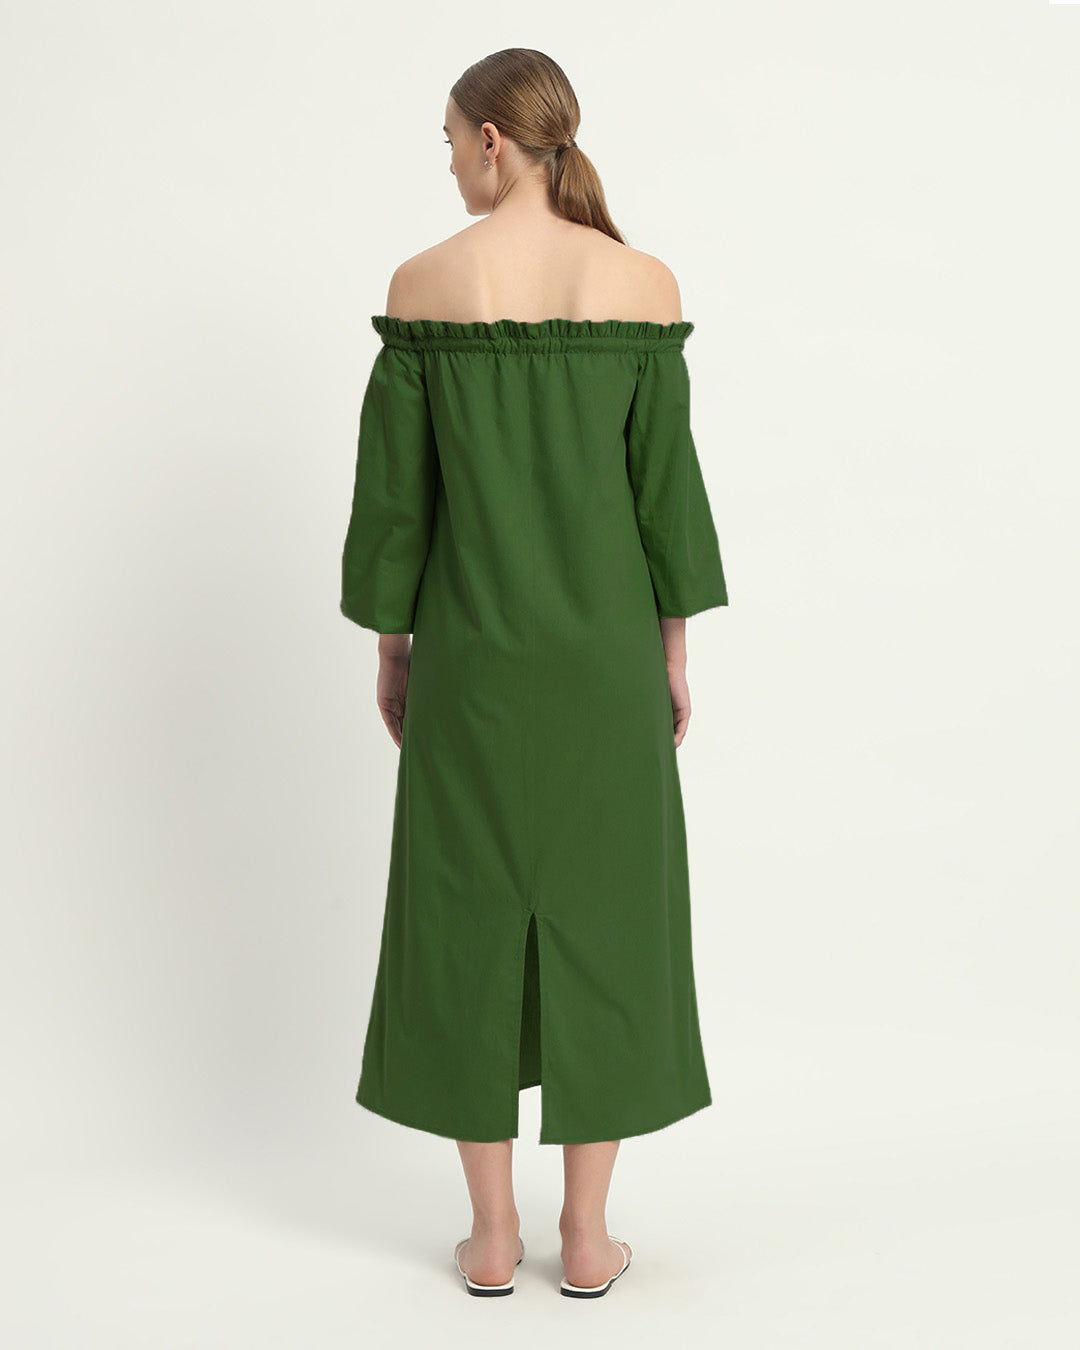 The Carlisle Emerald Cotton Dress